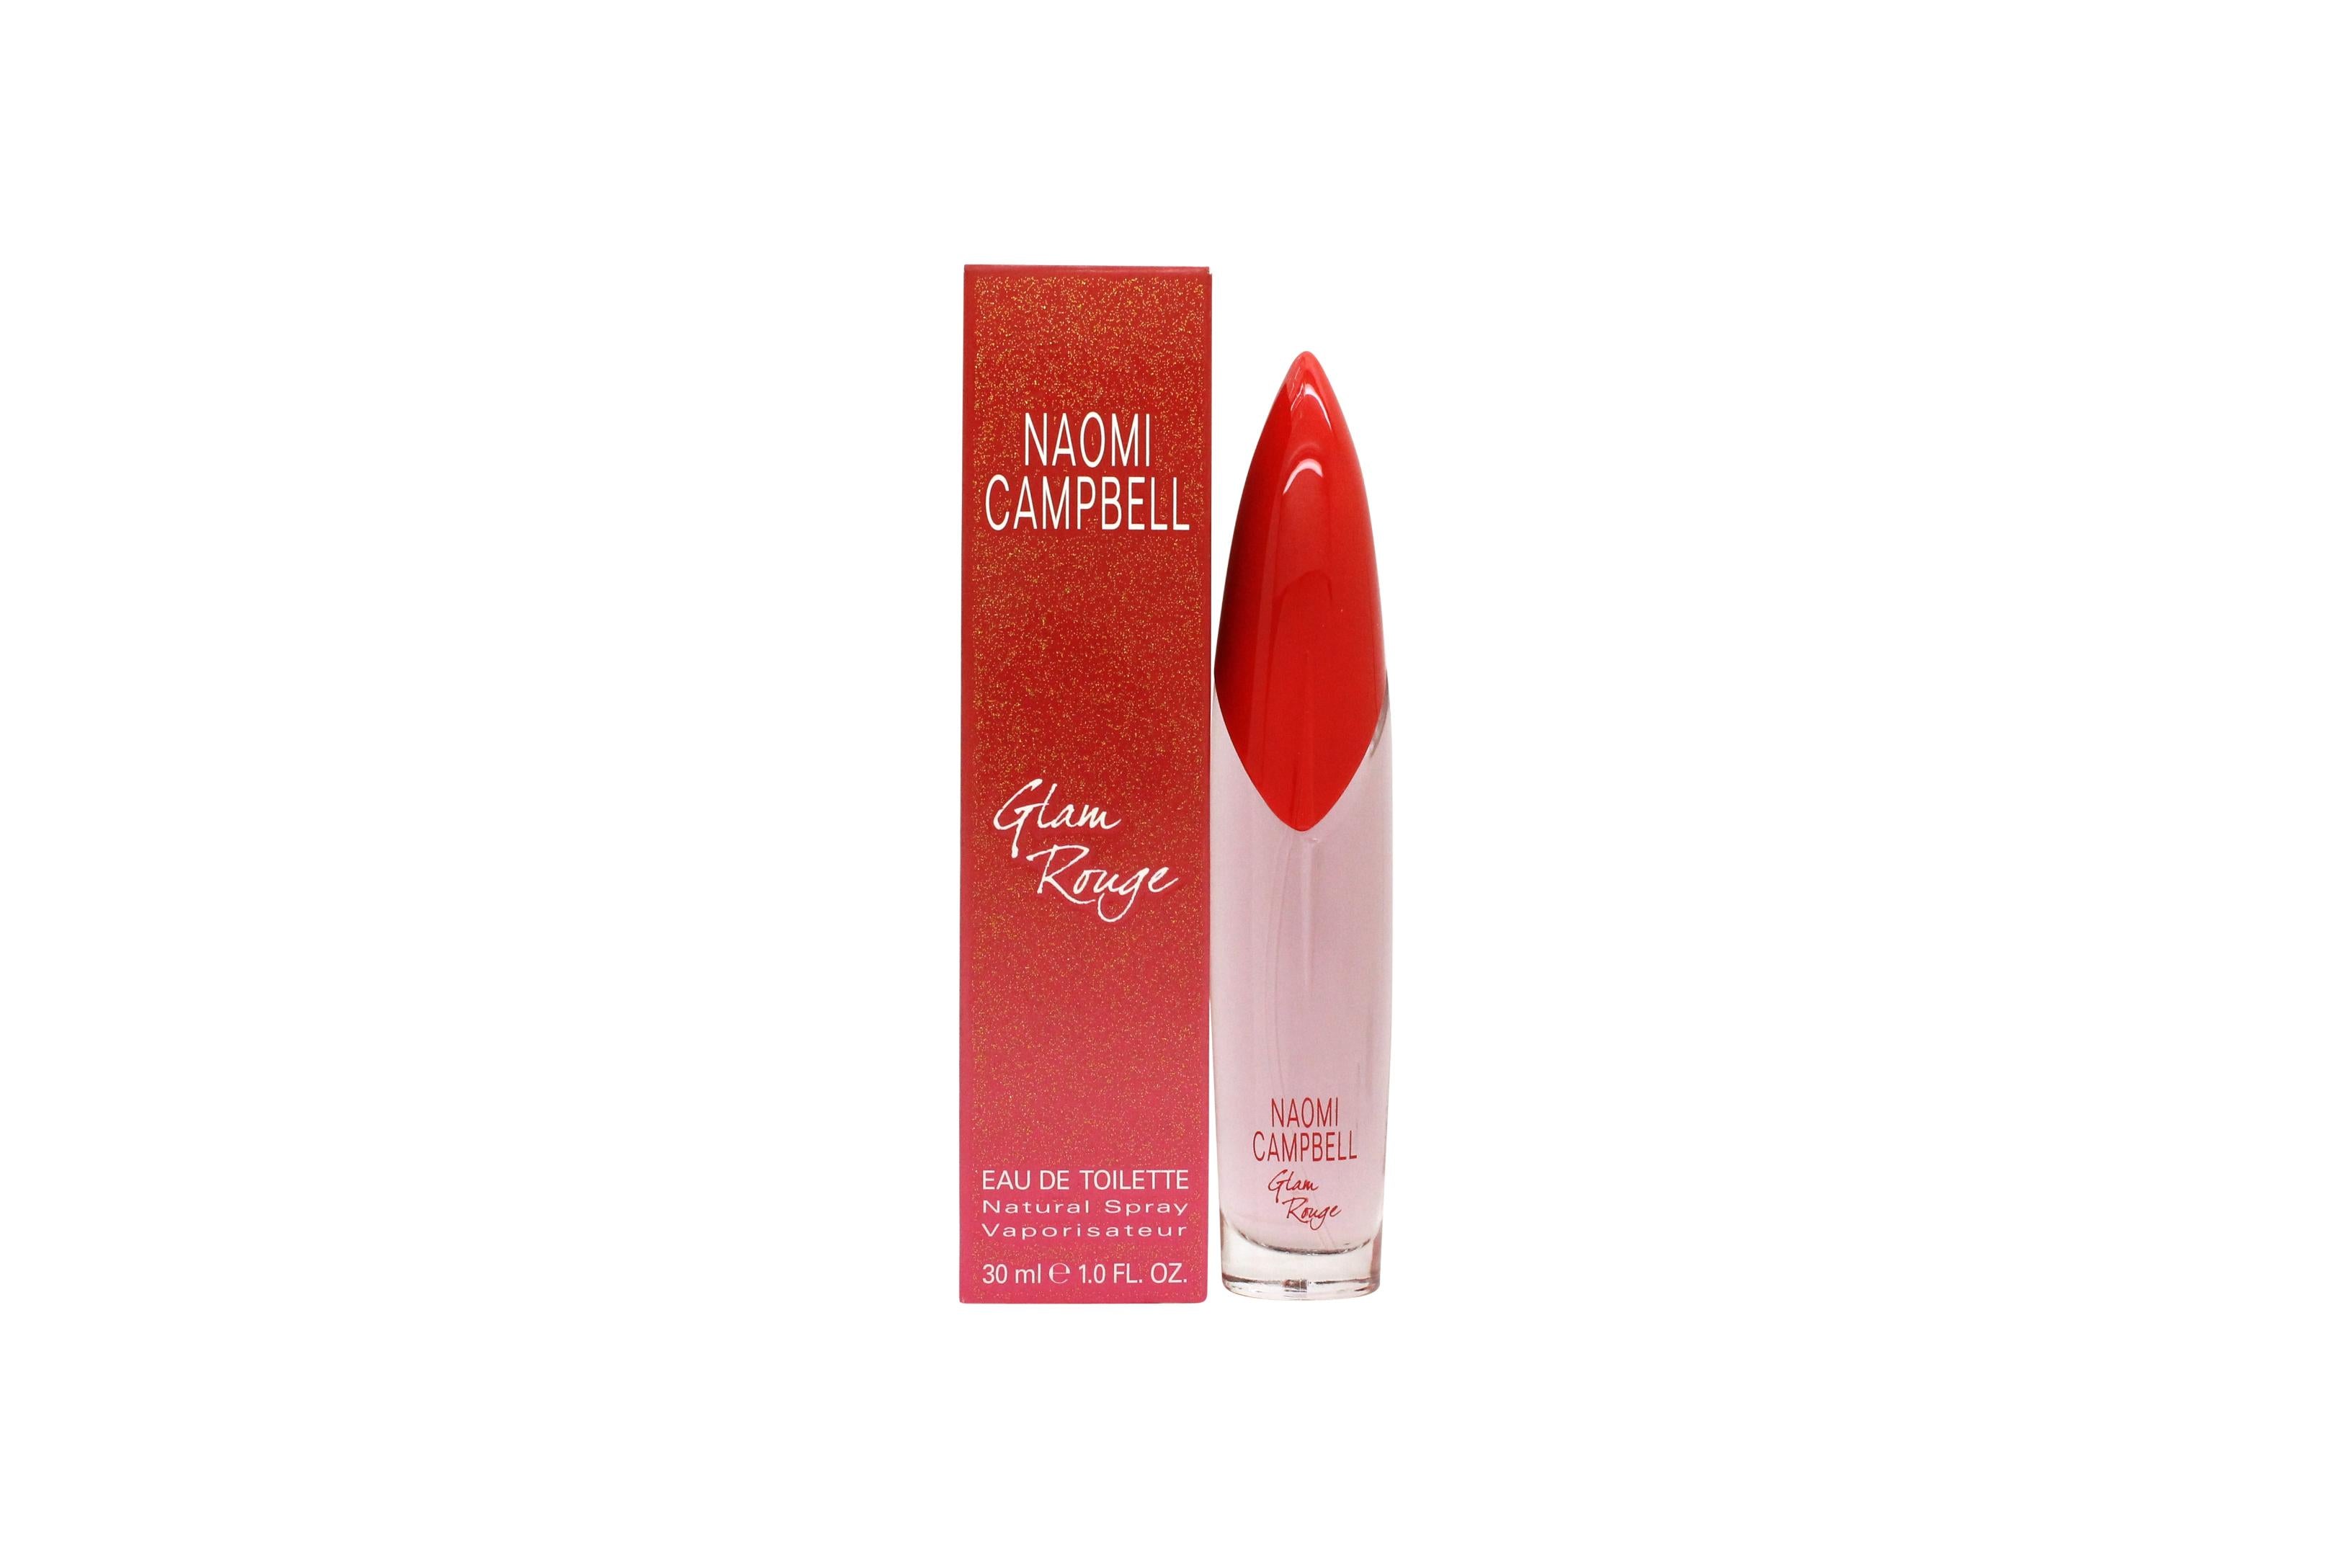 View Naomi Campbell Glam Rouge Eau de Toilette 30ml Spray information